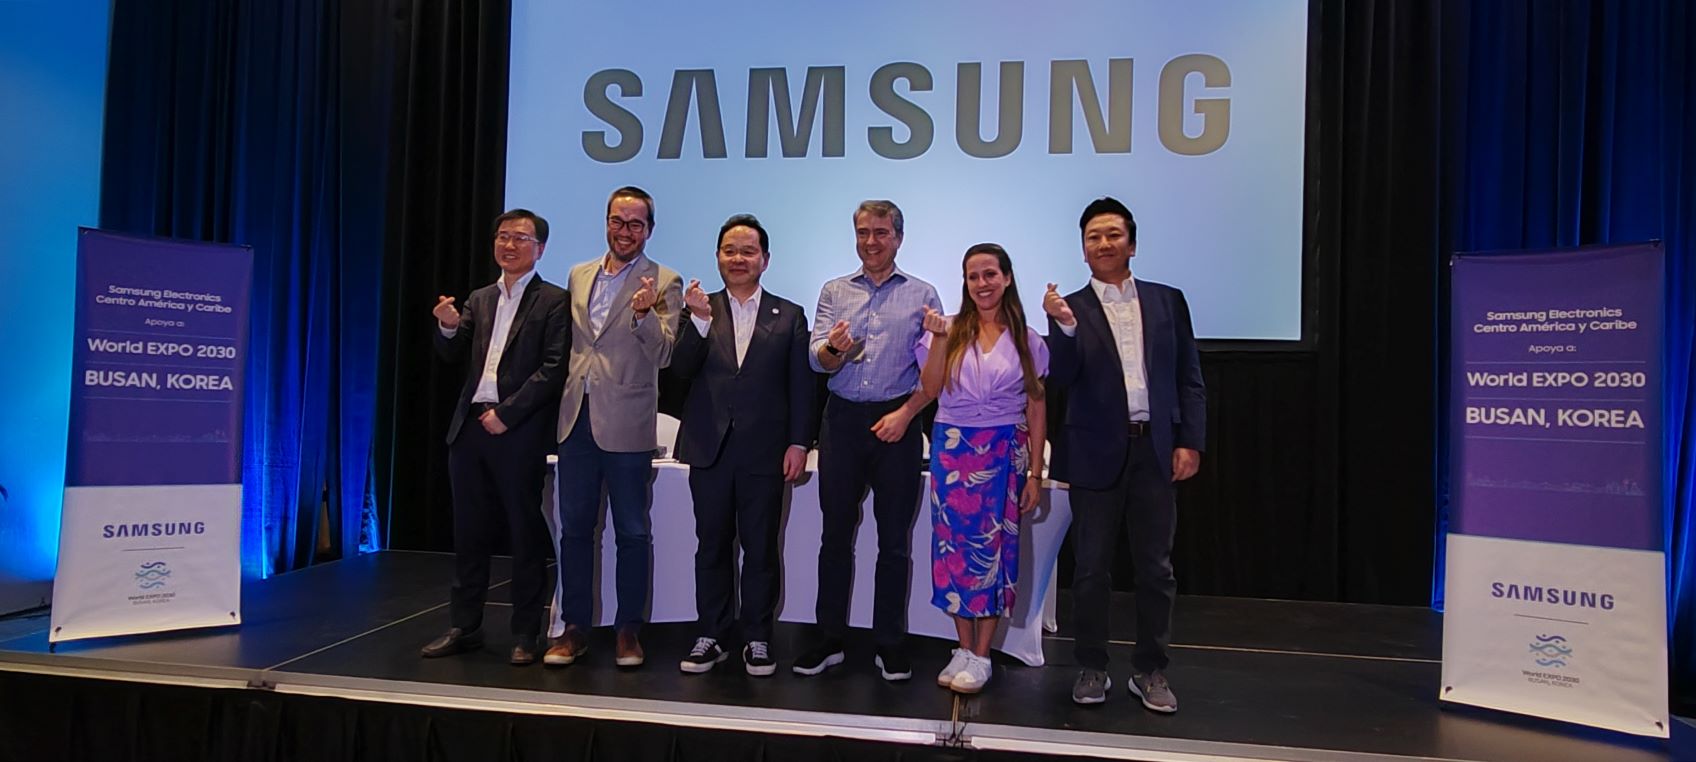 Busan compite para albergar la Expo Mundial 2030, Samsung confirma apoyo